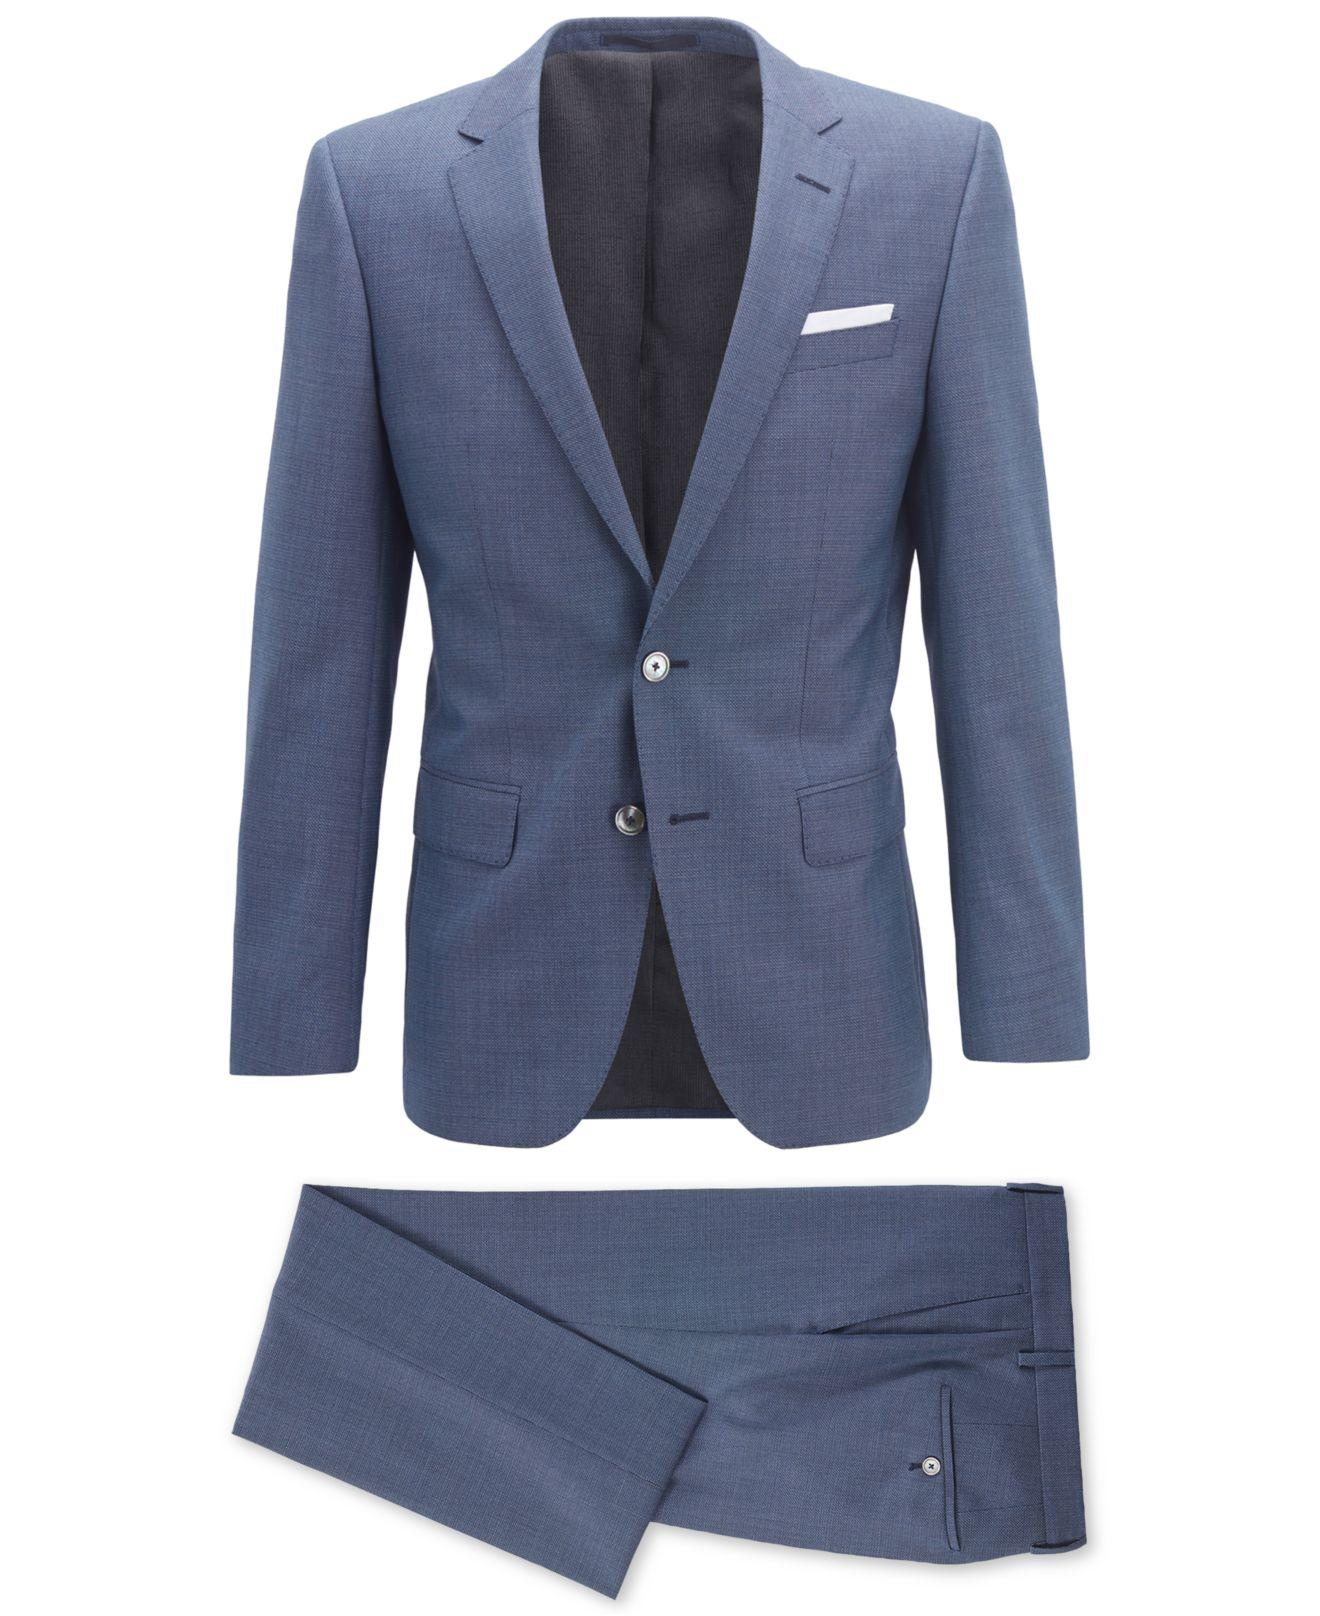 BOSS by Hugo Boss Wool Hutson/gander Textured Weave Slim Fit Suit in Navy  (Blue) for Men - Lyst